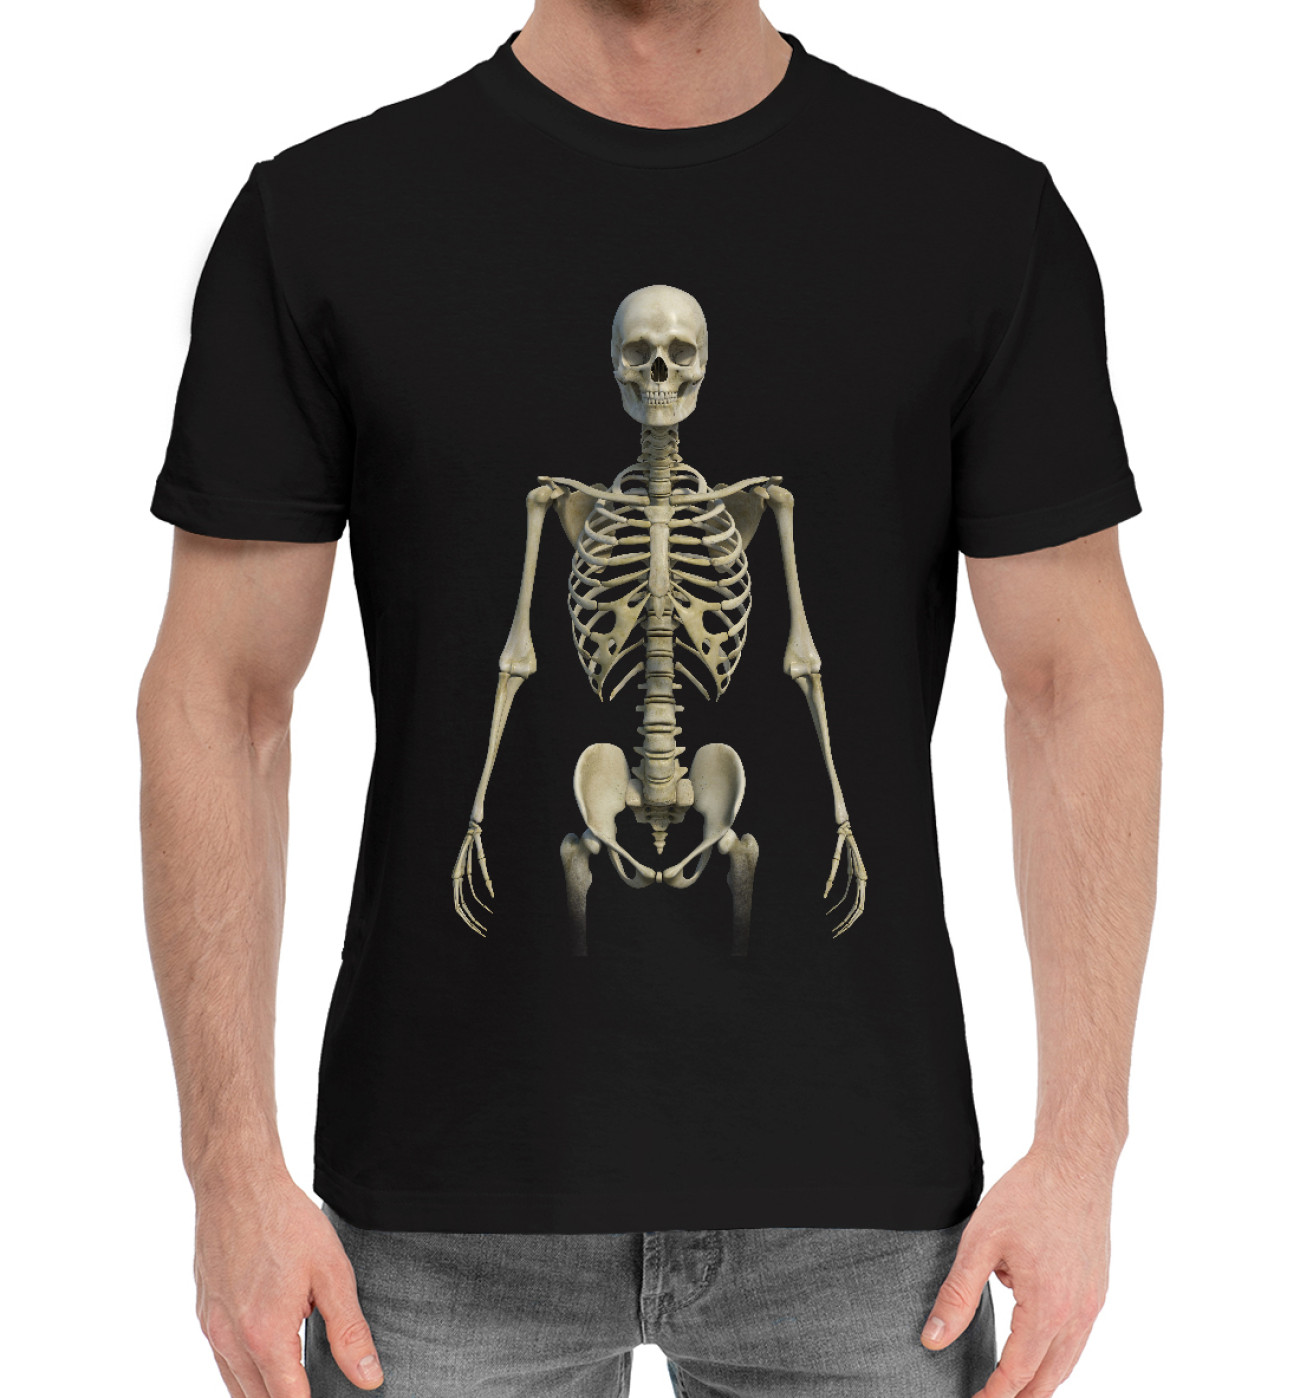 Мужская Хлопковая футболка Стоящий скелет, артикул: SKE-326169-hfu-2